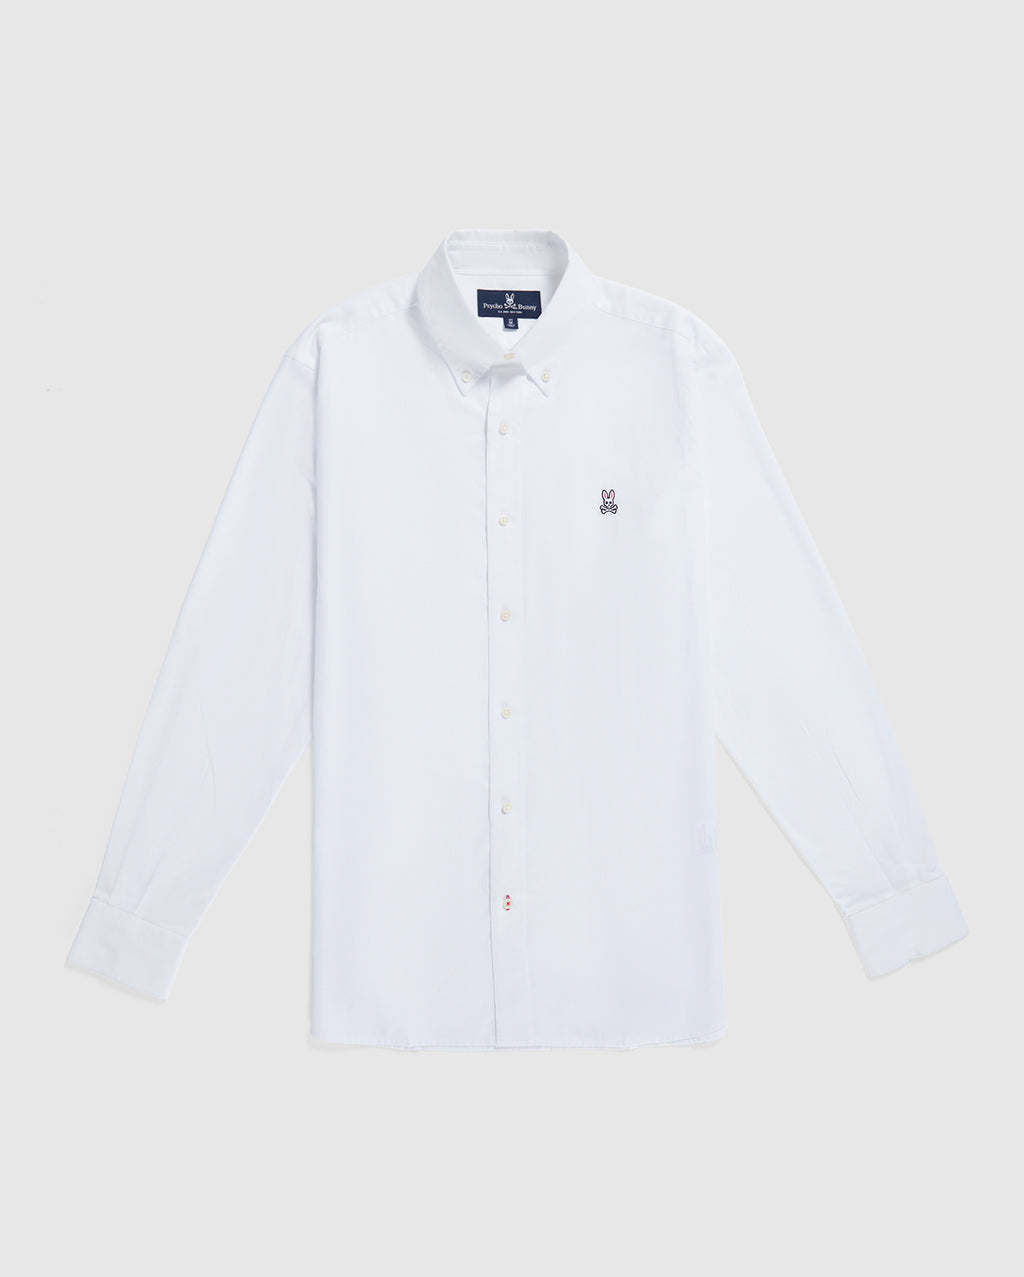 Guy Laroche Men's Shirt, White Dress Shirt, 100% Cotton Button